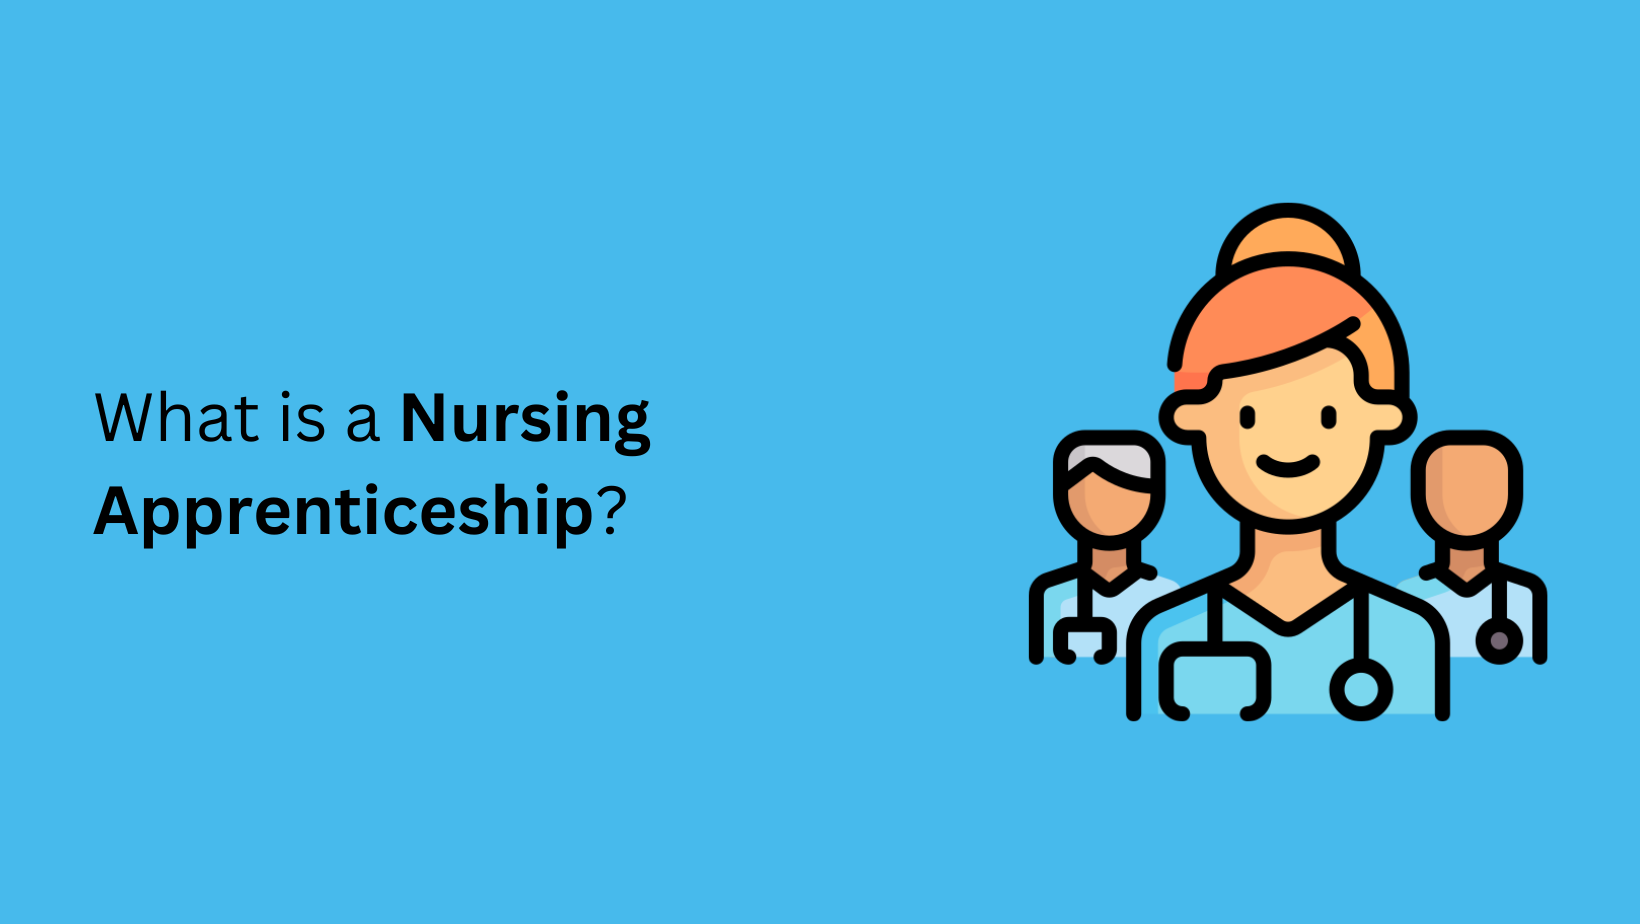 What is a Nursing Apprenticeship